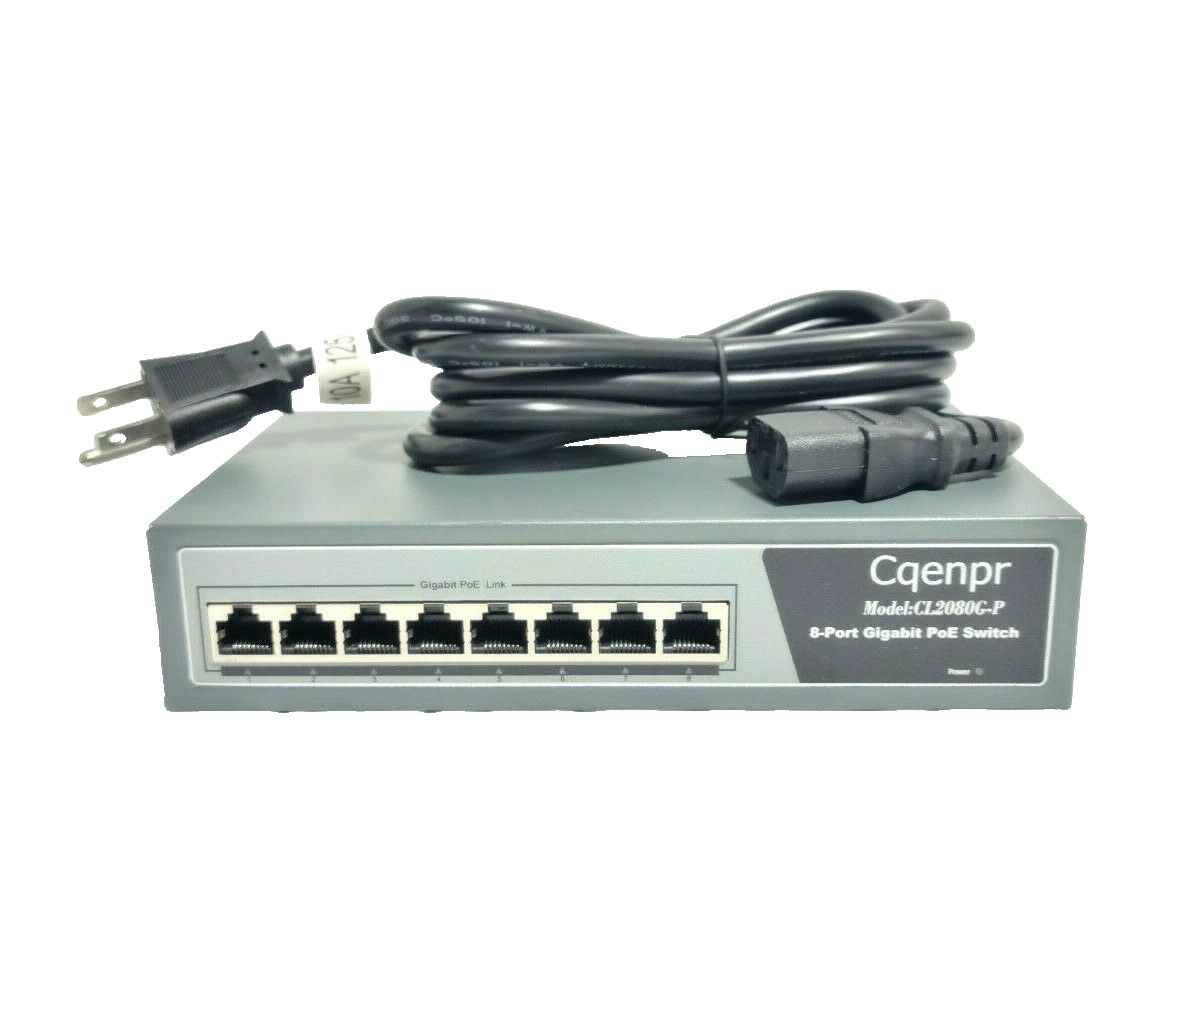 Cqenpr 8-Port Gigabit PoE Switch Model: CL2080G-P